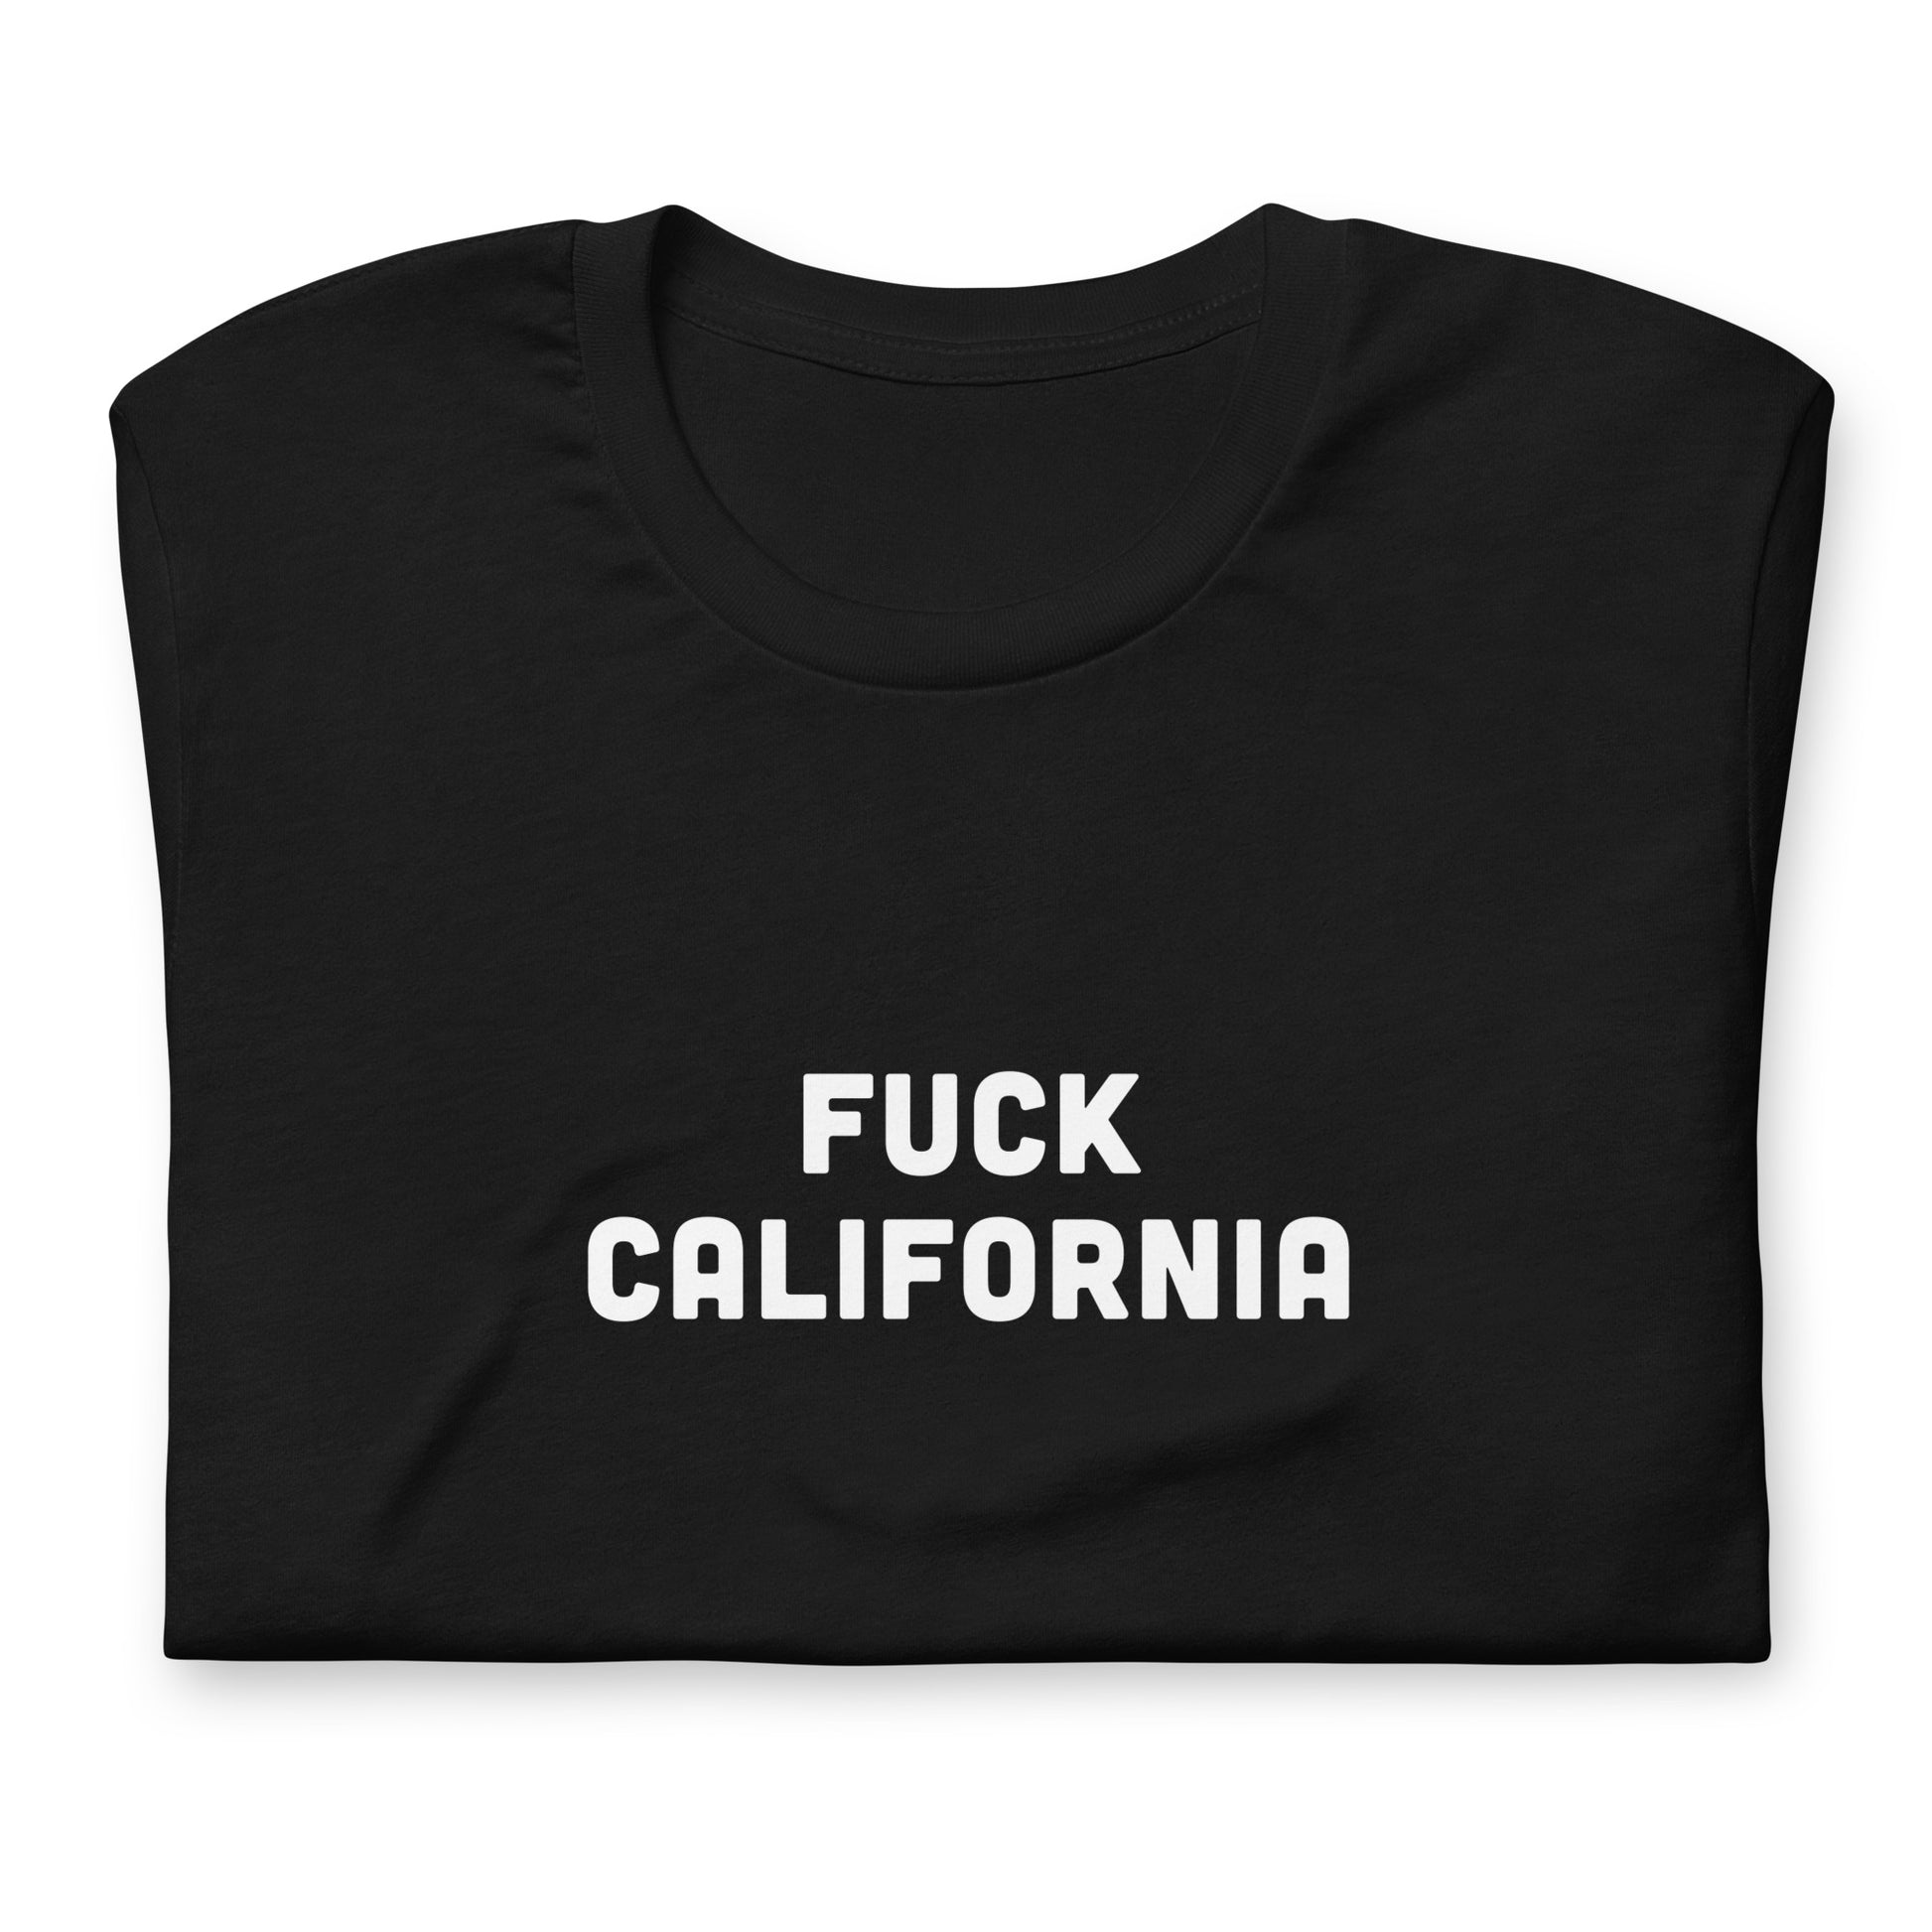 Fuck California T-Shirt Size M Color Black